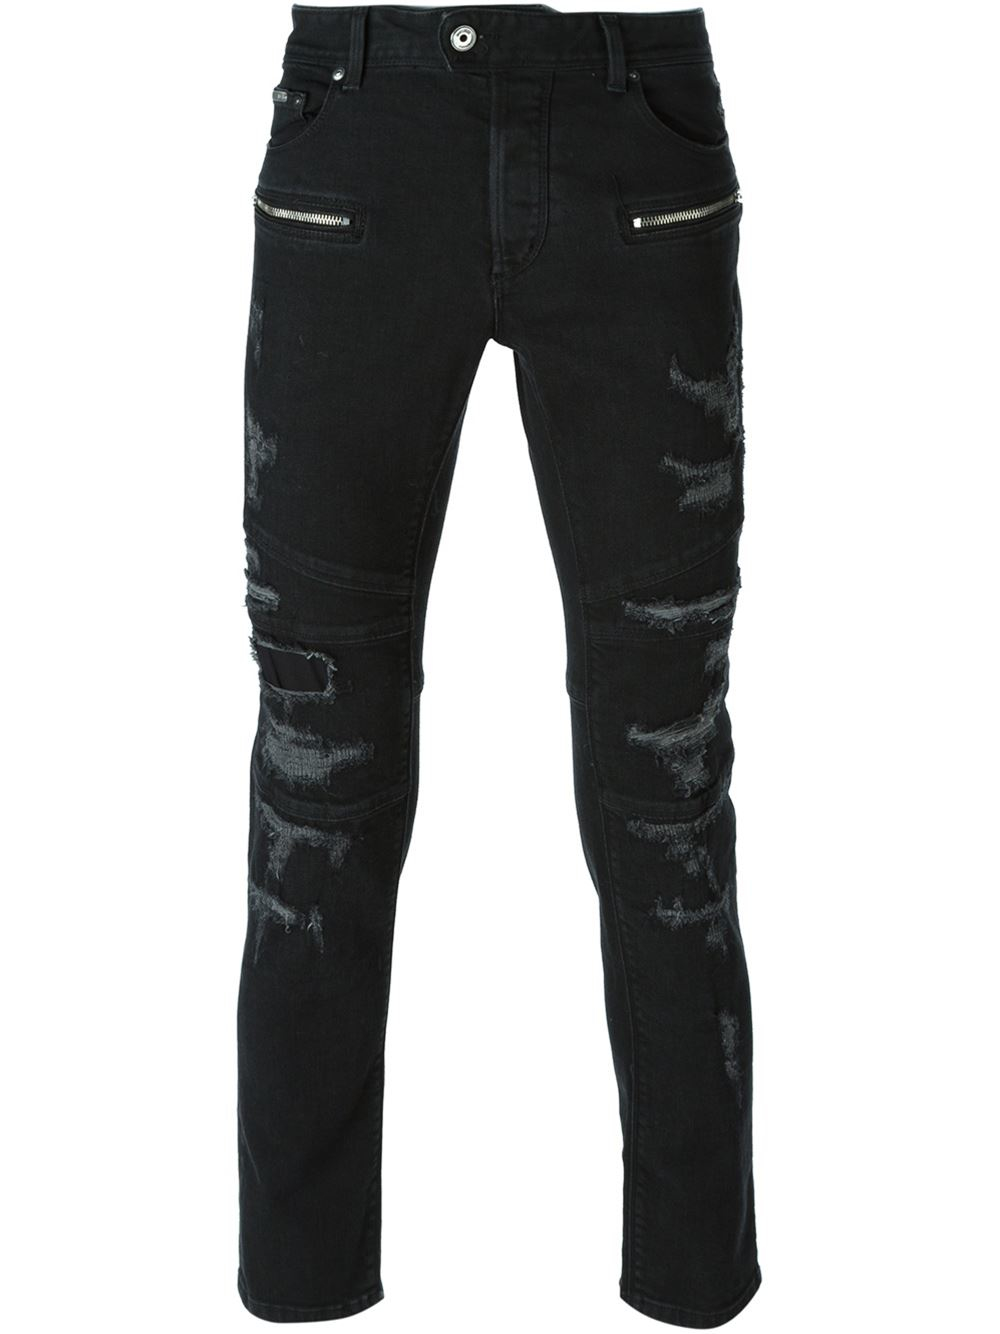 Lyst - Just Cavalli Distressed Zip Jeans in Black for Men